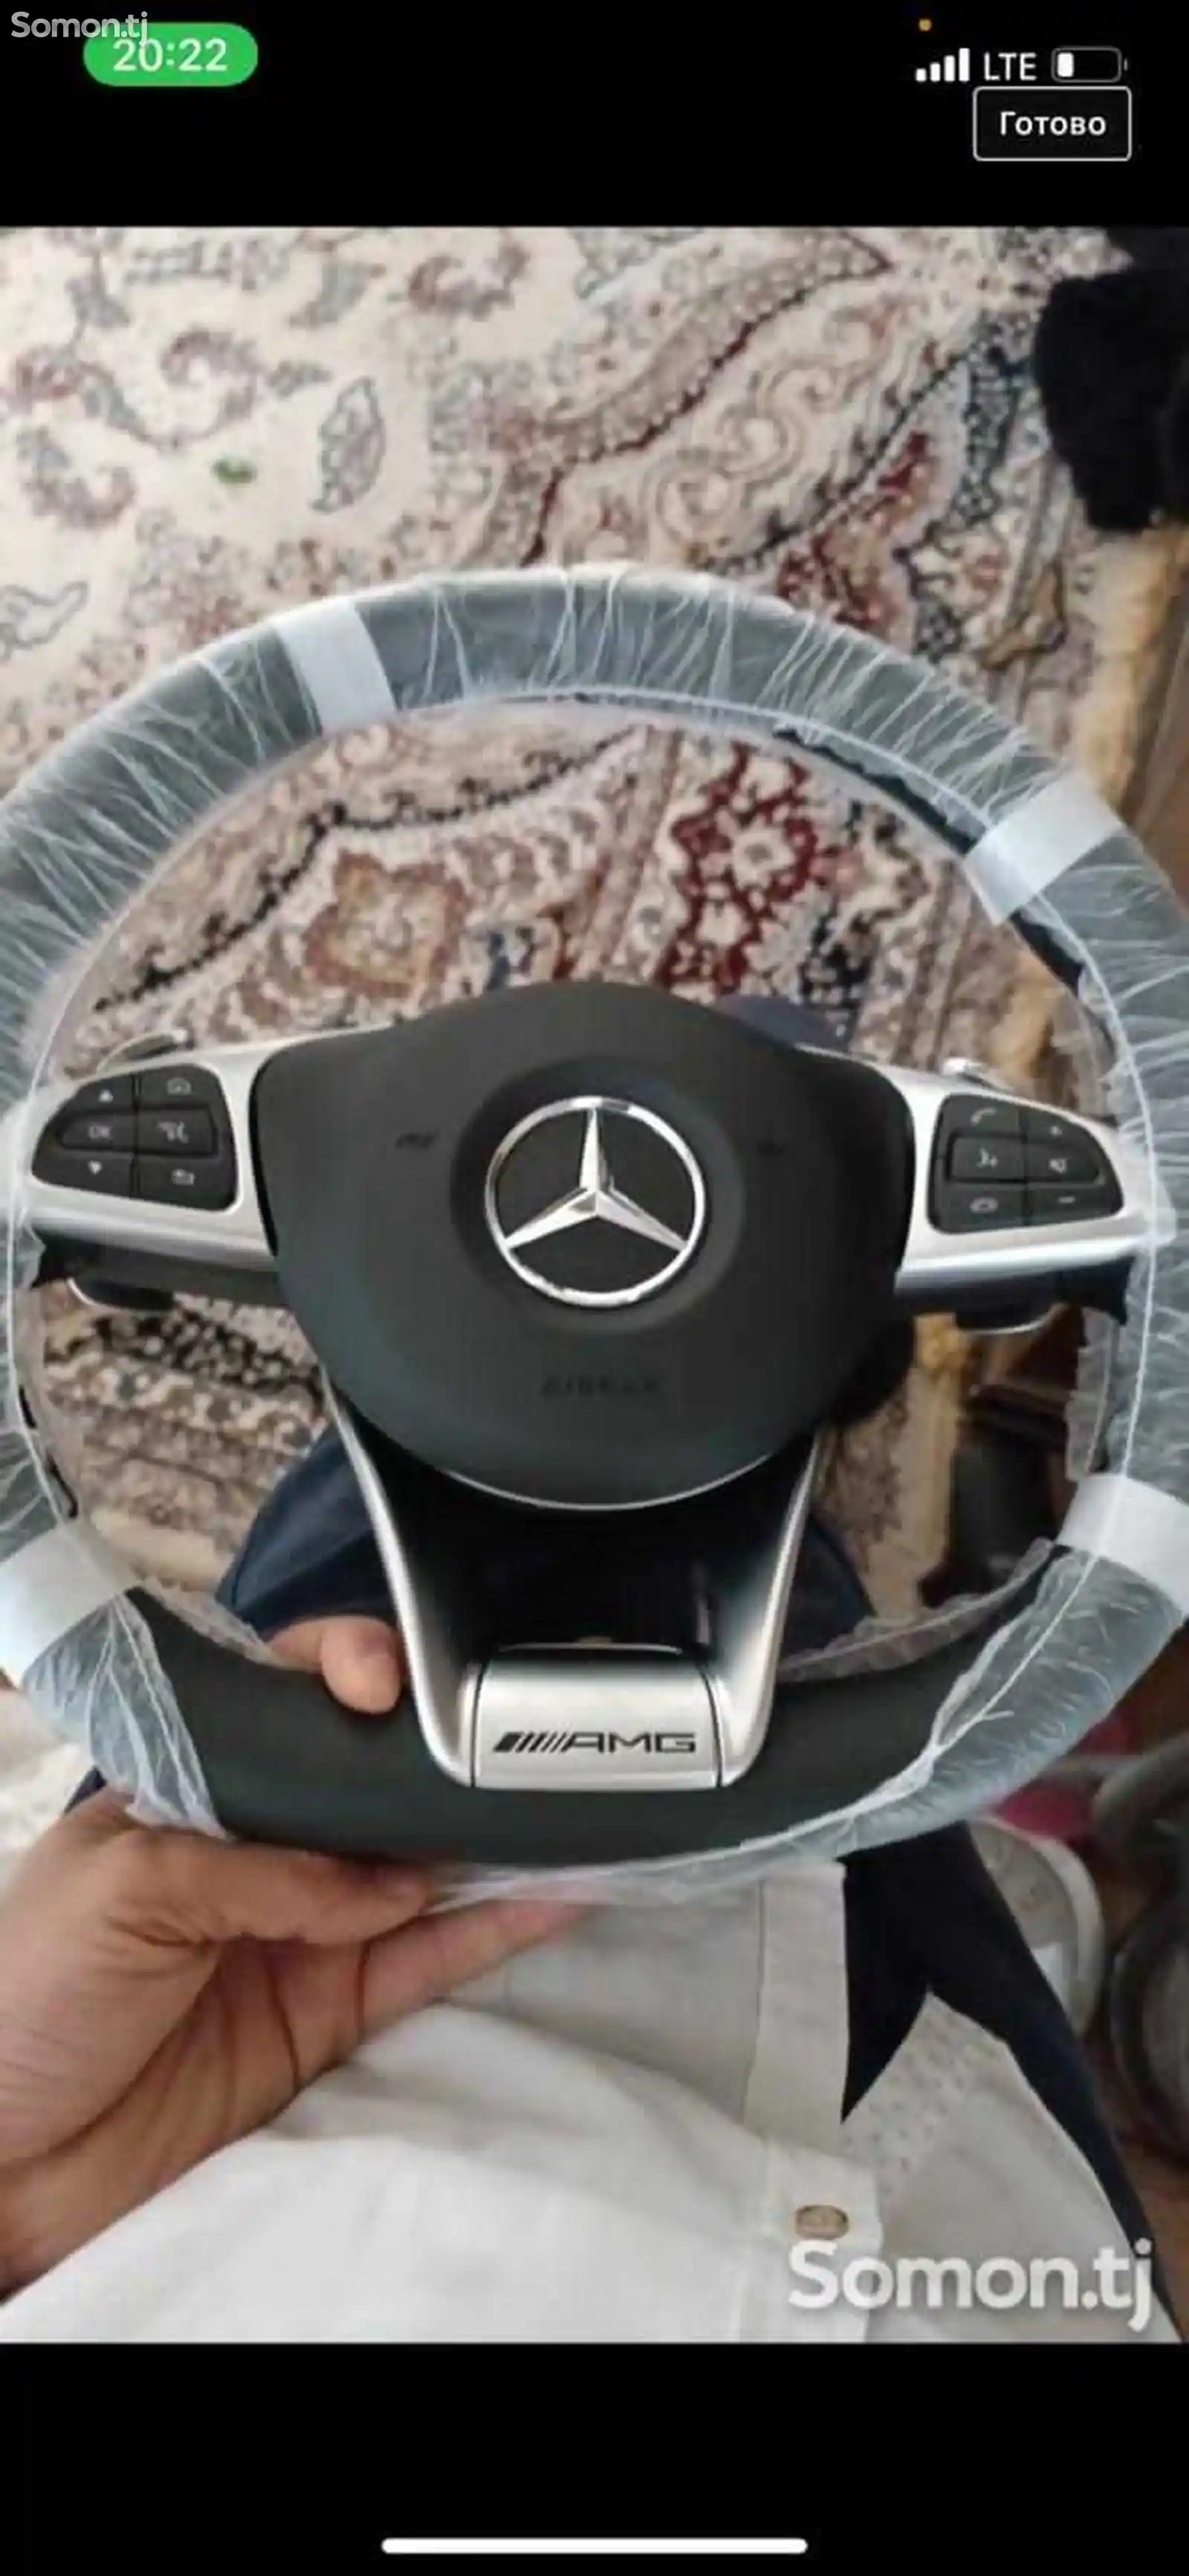 Руль от Mercedes-Benz-1